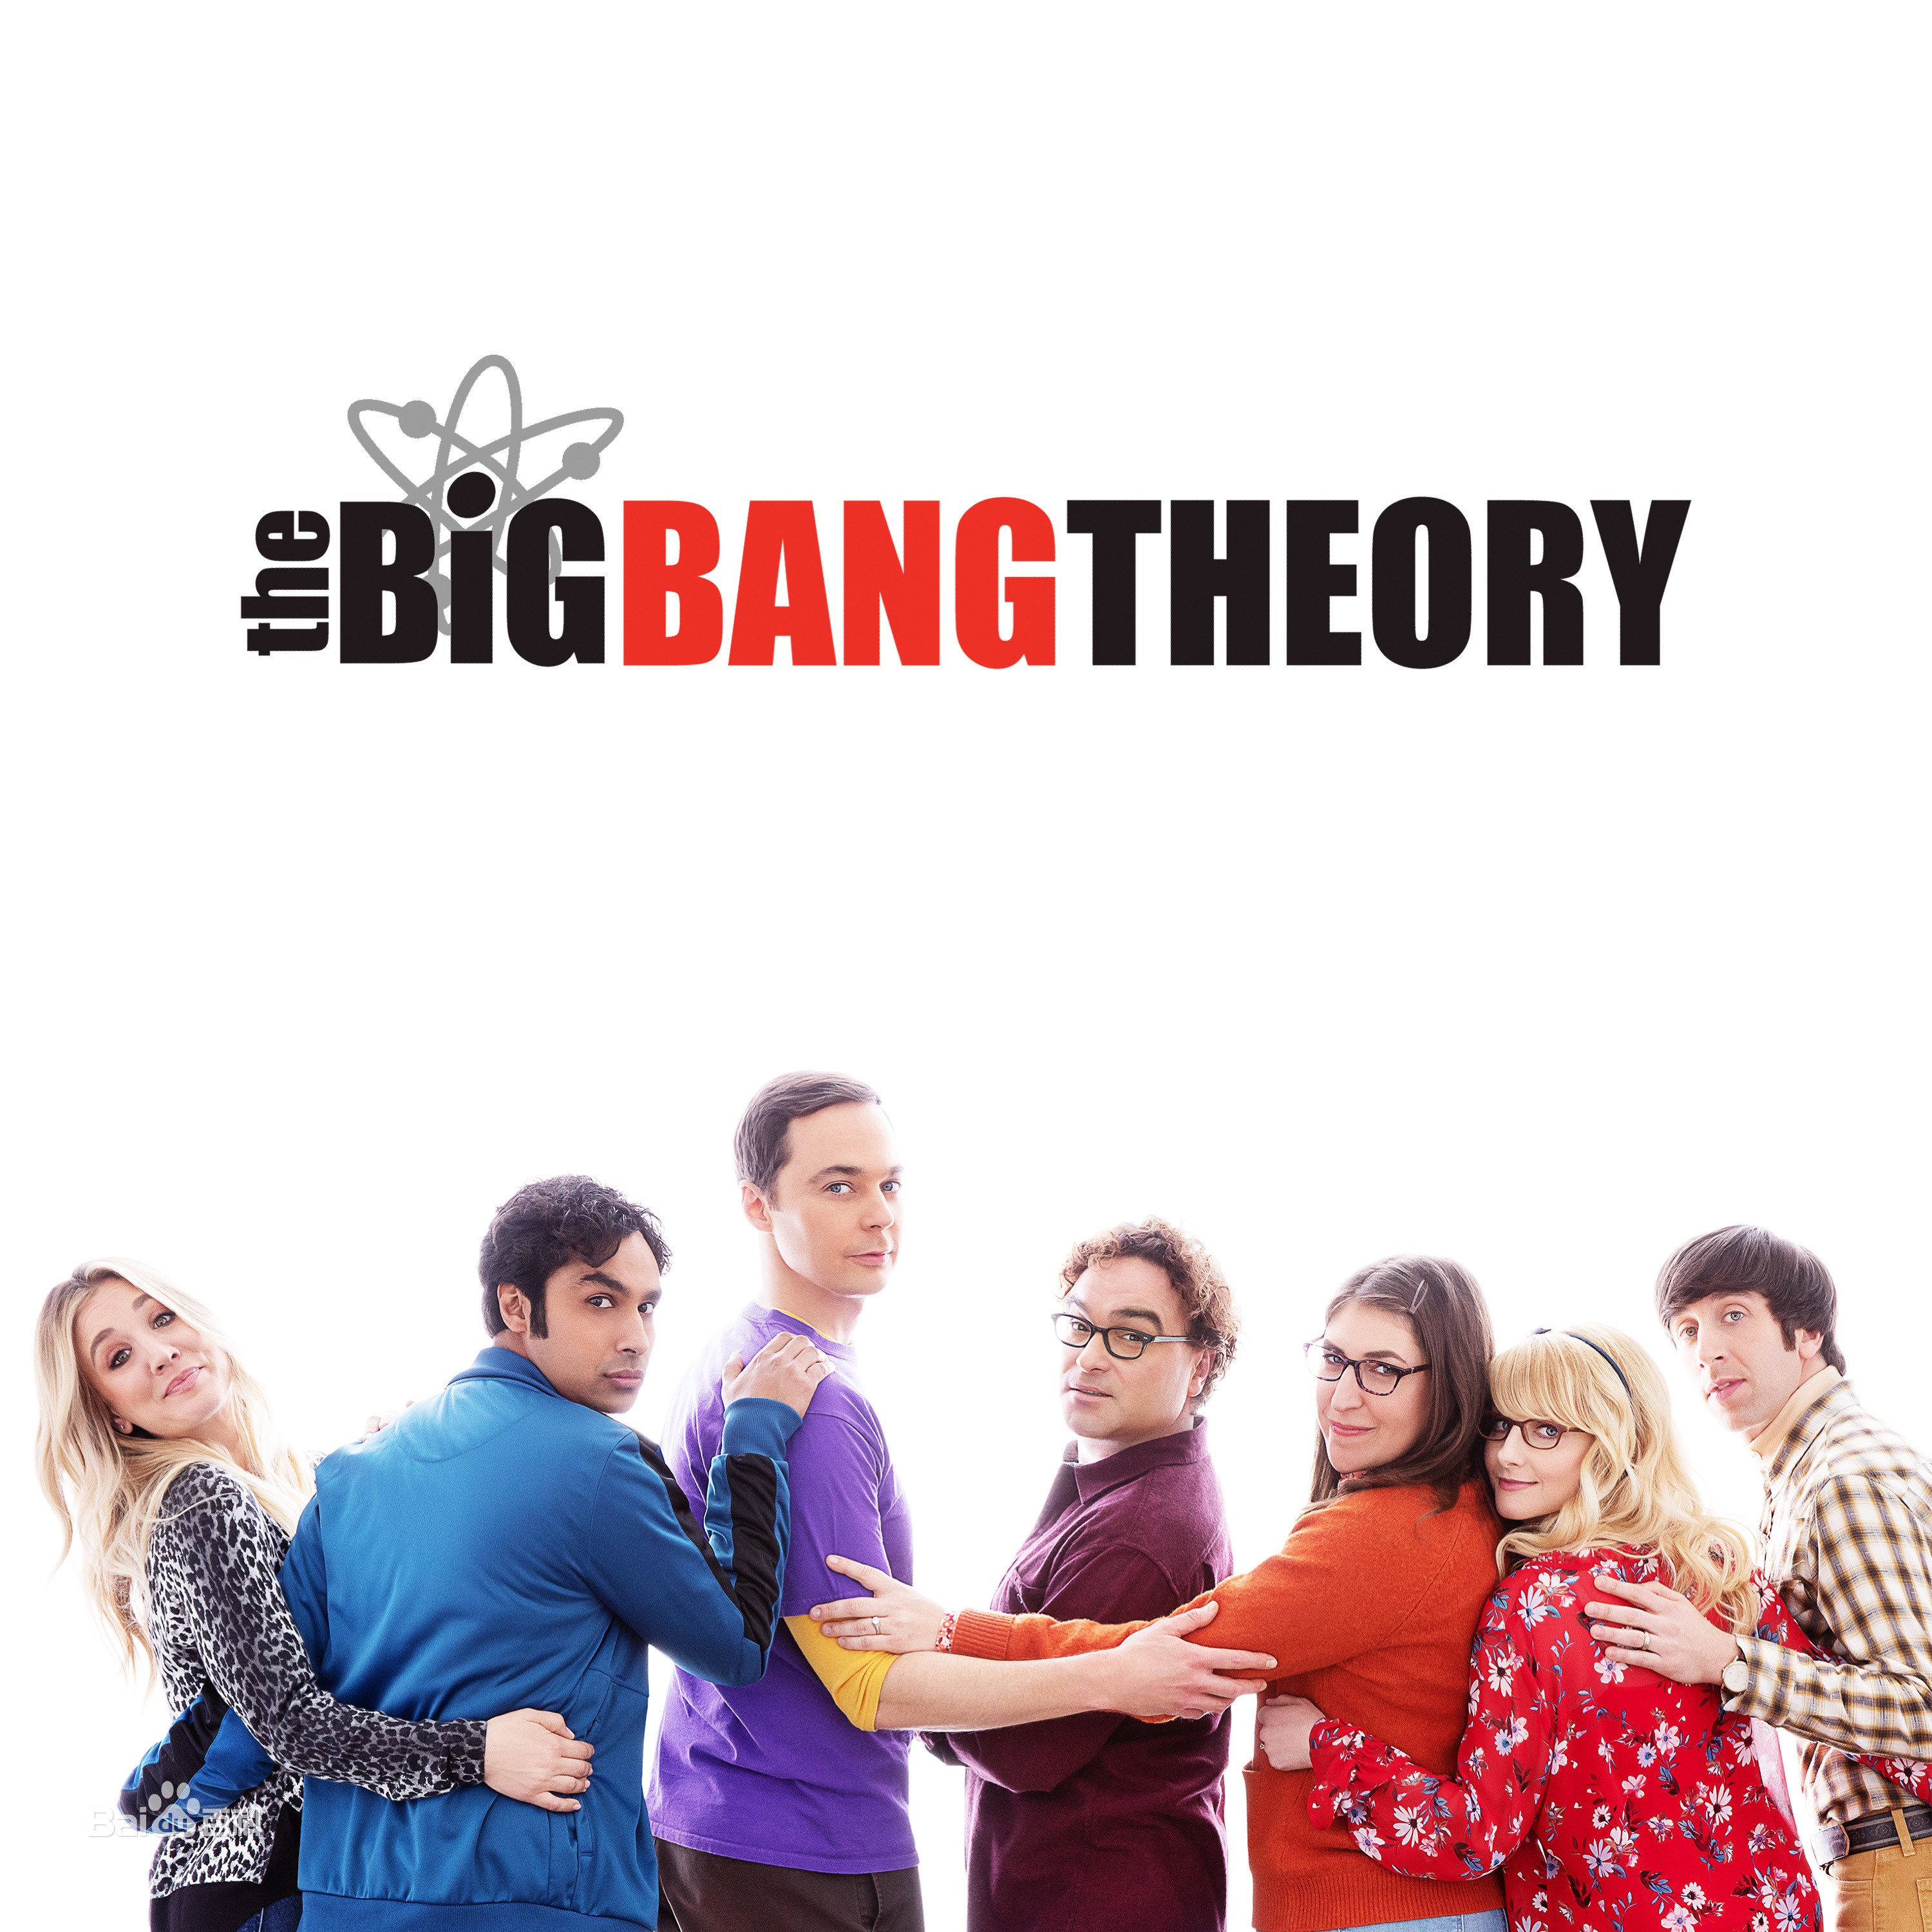 9,生活大爆炸 the big bang theory(适中)